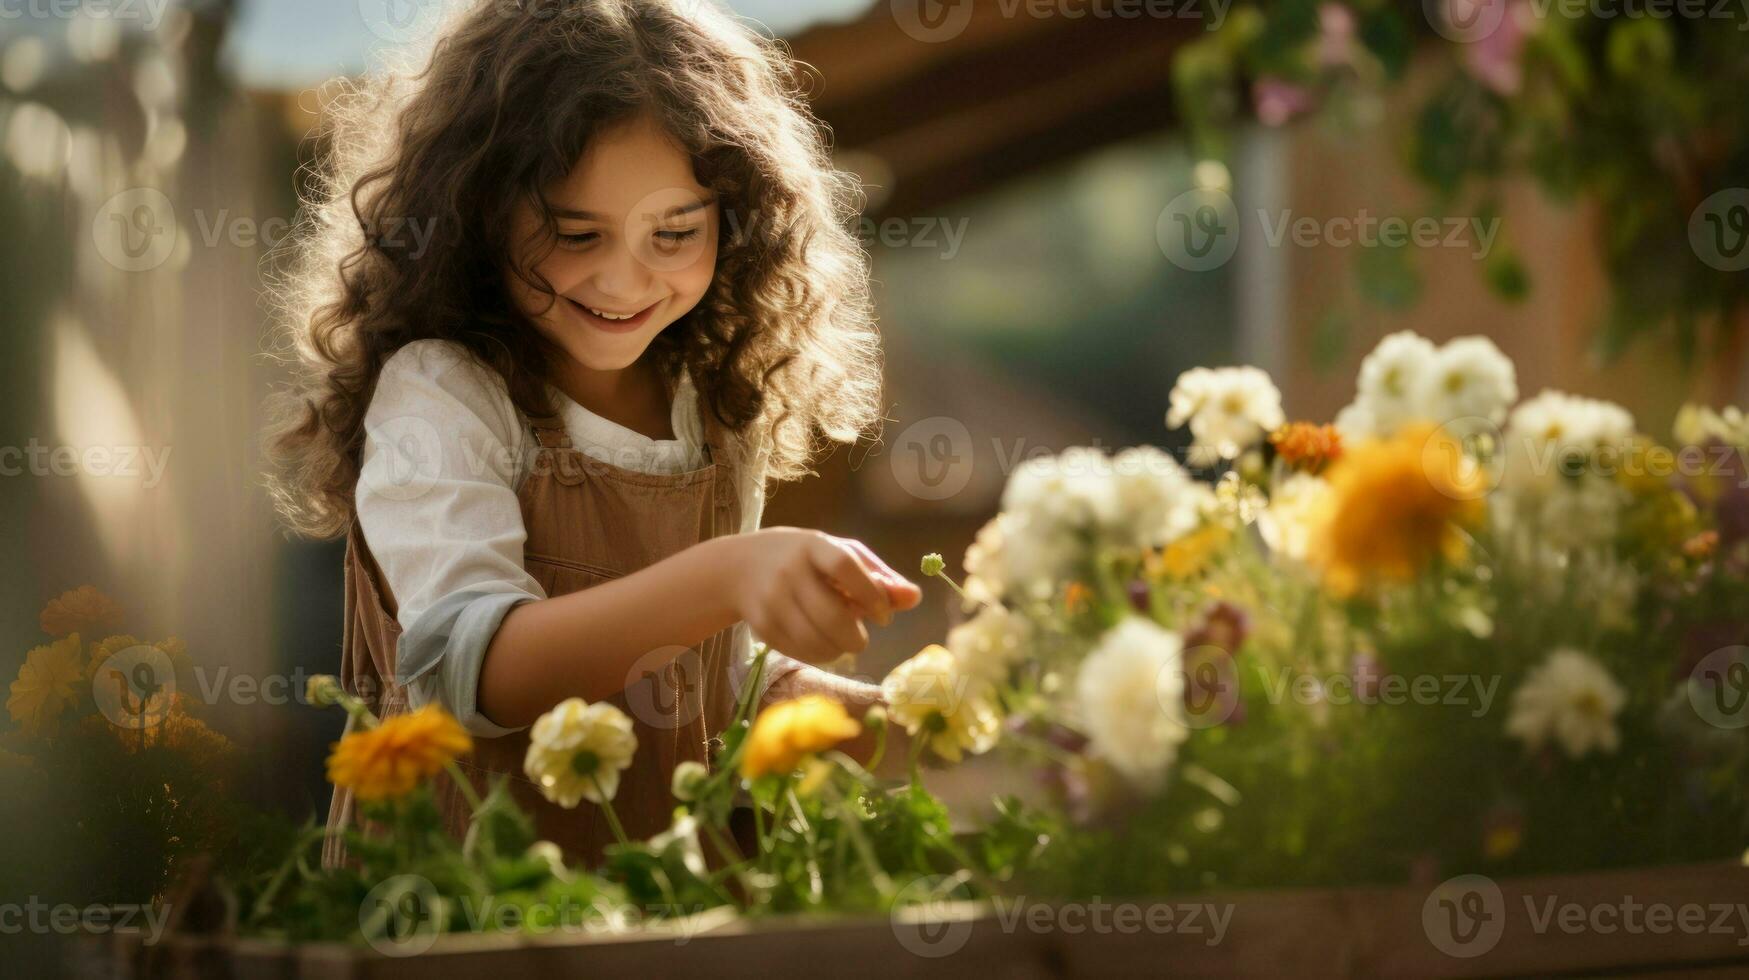 glimlachen weinig meisje nemen zorg en fabriek bloemen in de tuin of een boerderij ai gegenereerd foto